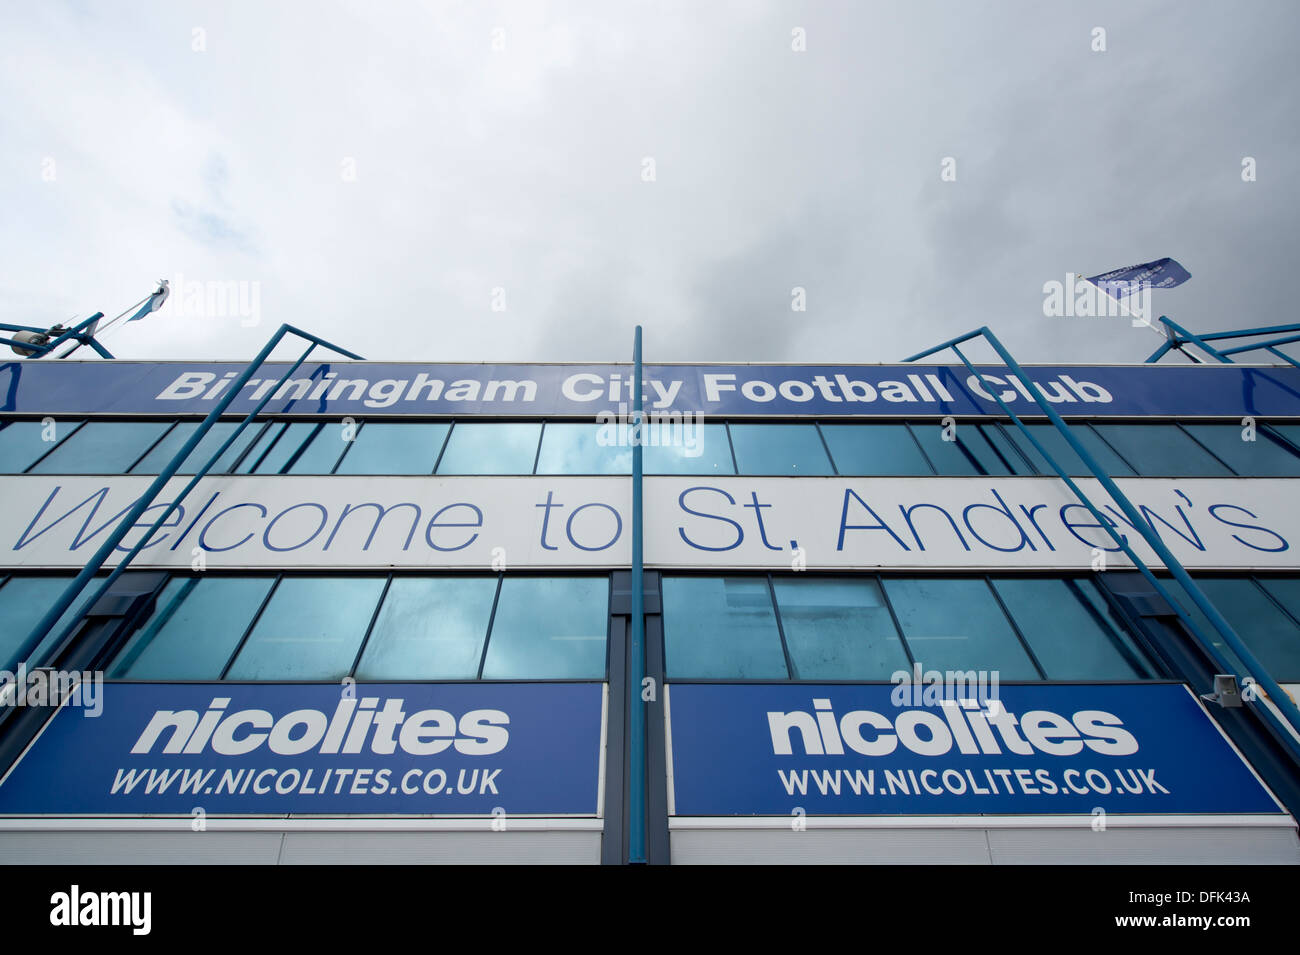 St Andrew's stadium, home of Birmingham City Football Club. Stock Photo